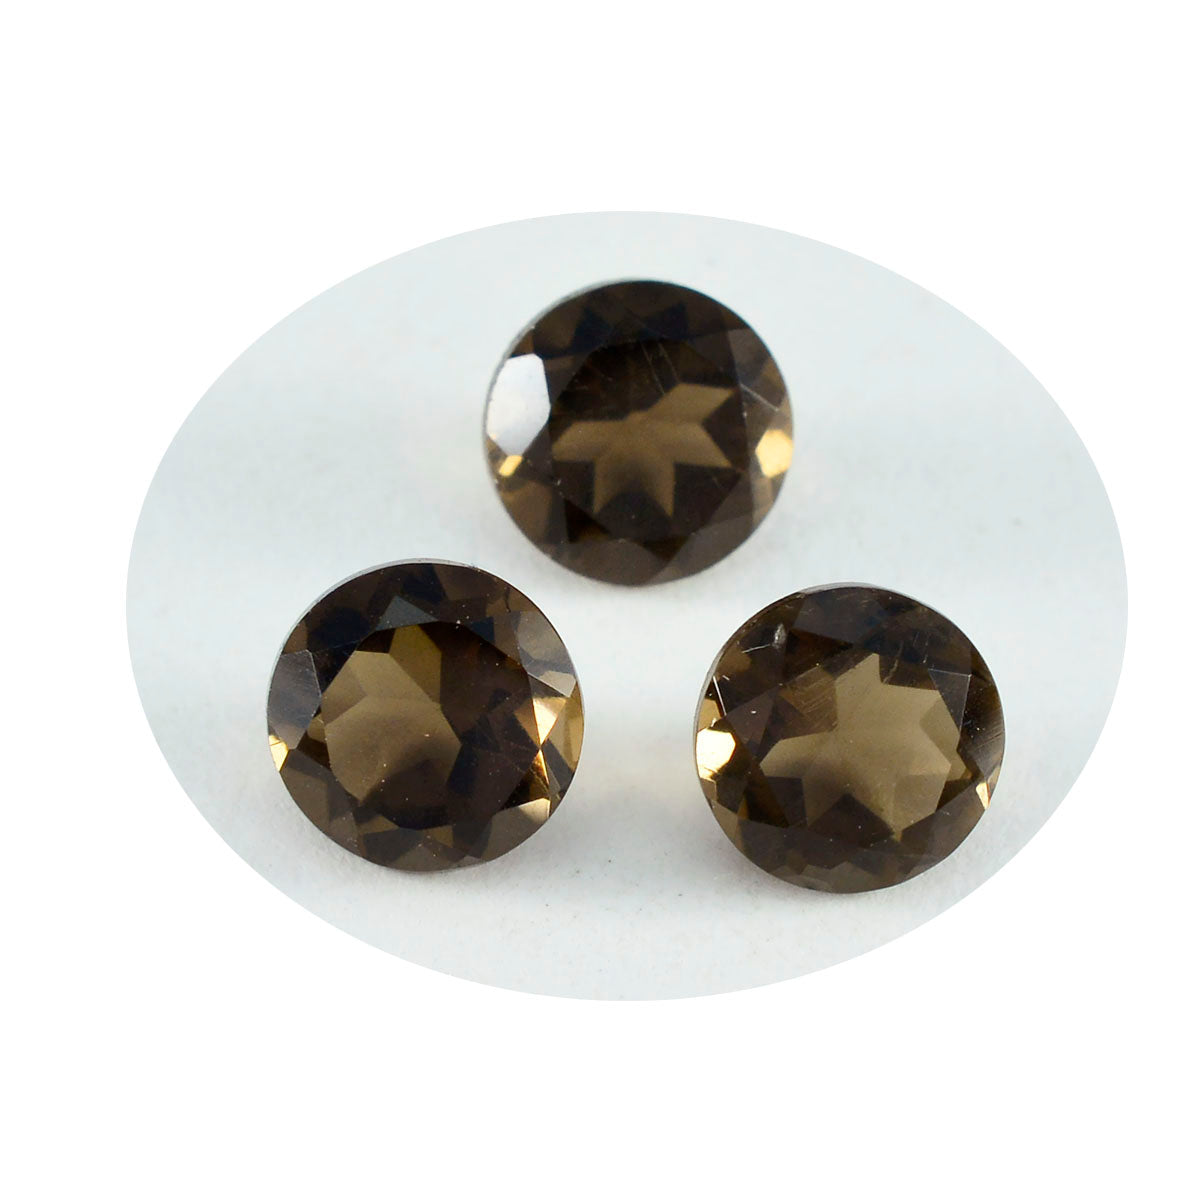 Riyogems 1PC Genuine Brown Smoky Quartz Faceted 10x10 mm Round Shape handsome Quality Gemstone